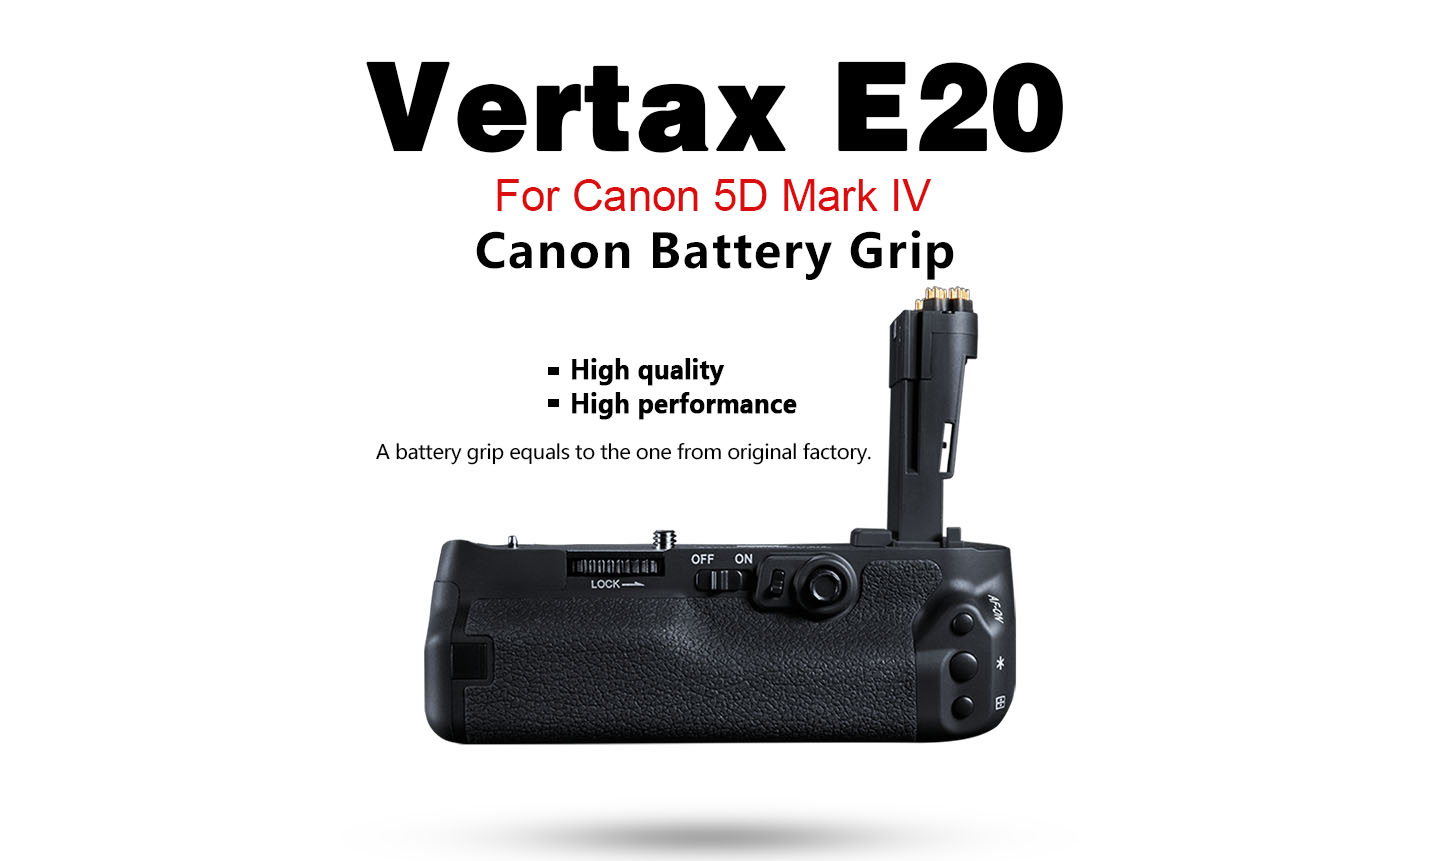 Vertax E20 For Canon 5D Mark IV